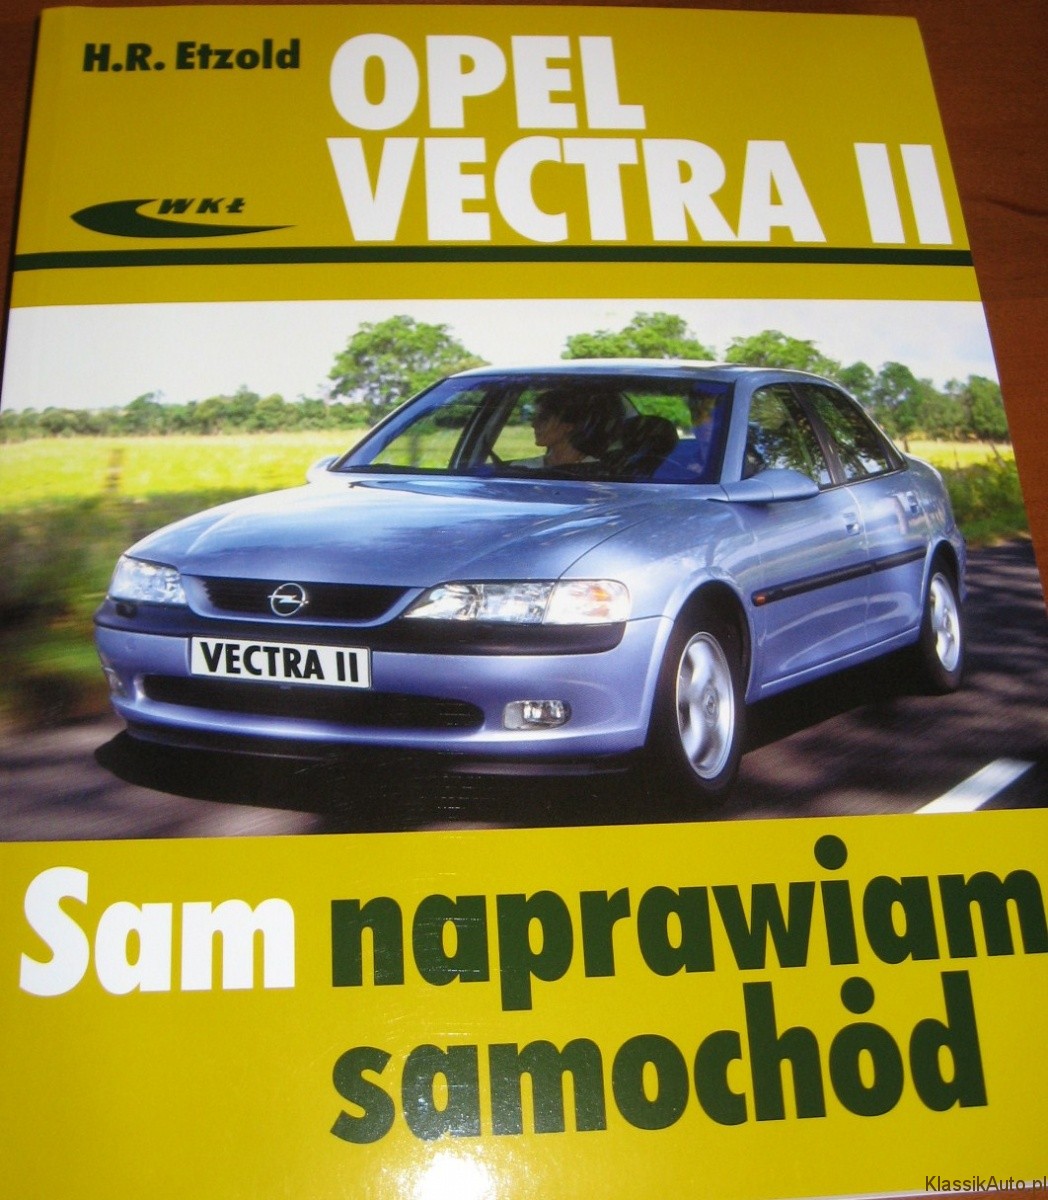 "Opel Vectra II", H. R. Etzold, WKŁ, 2009 r. KlassikAuto.pl